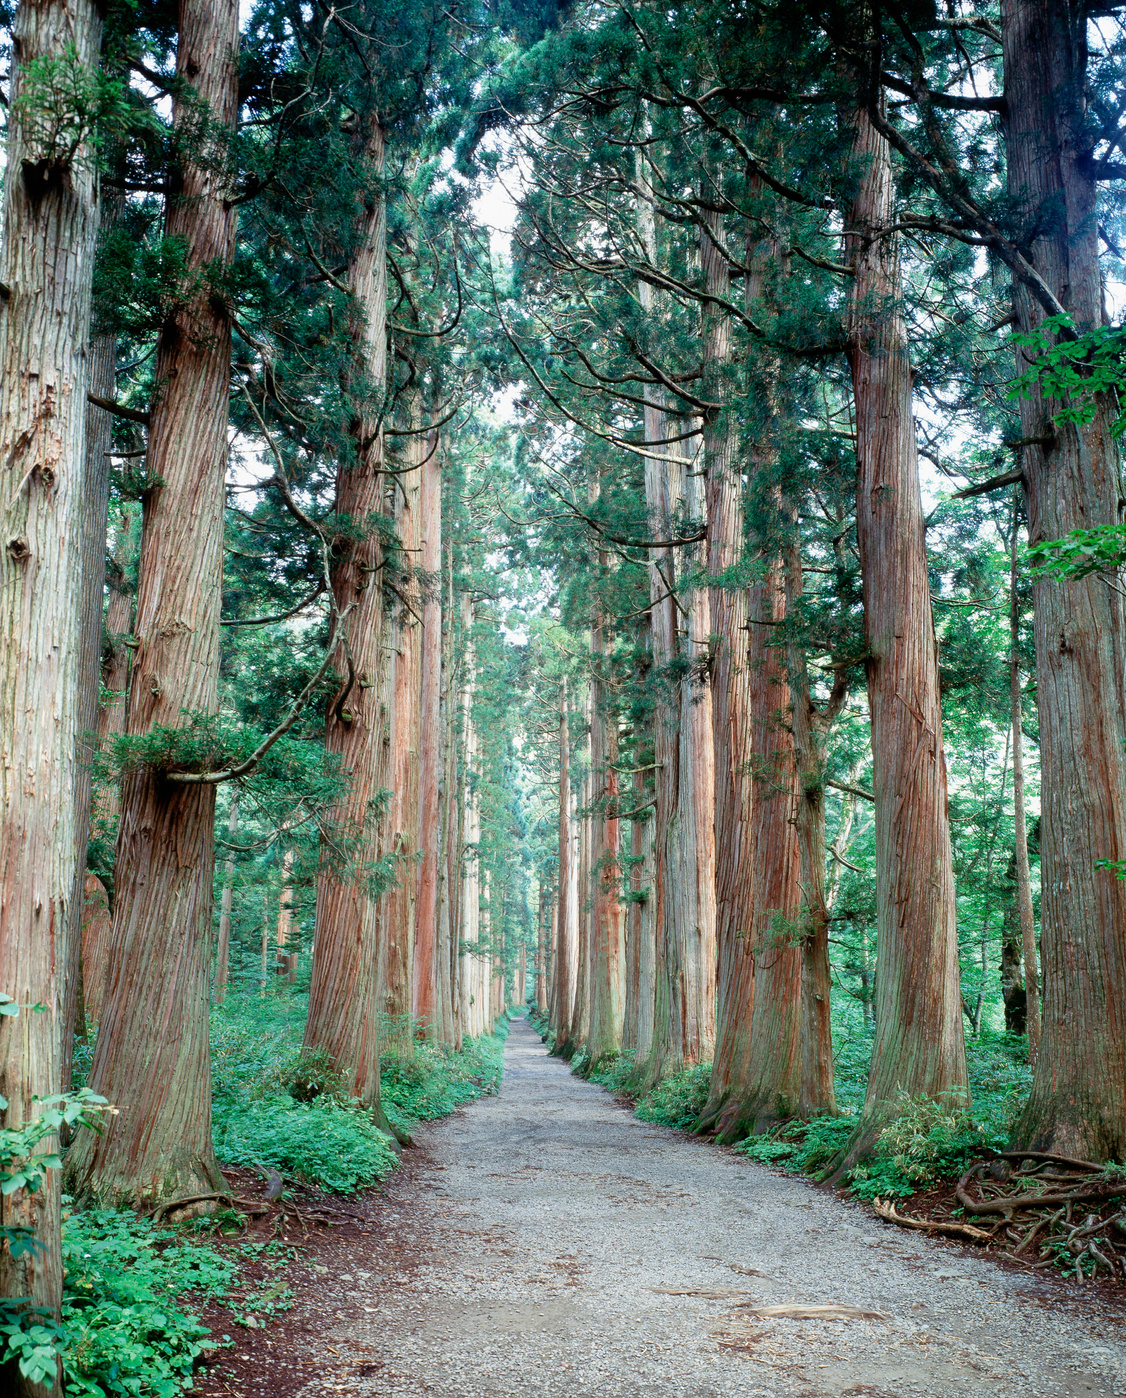 Cedar trees